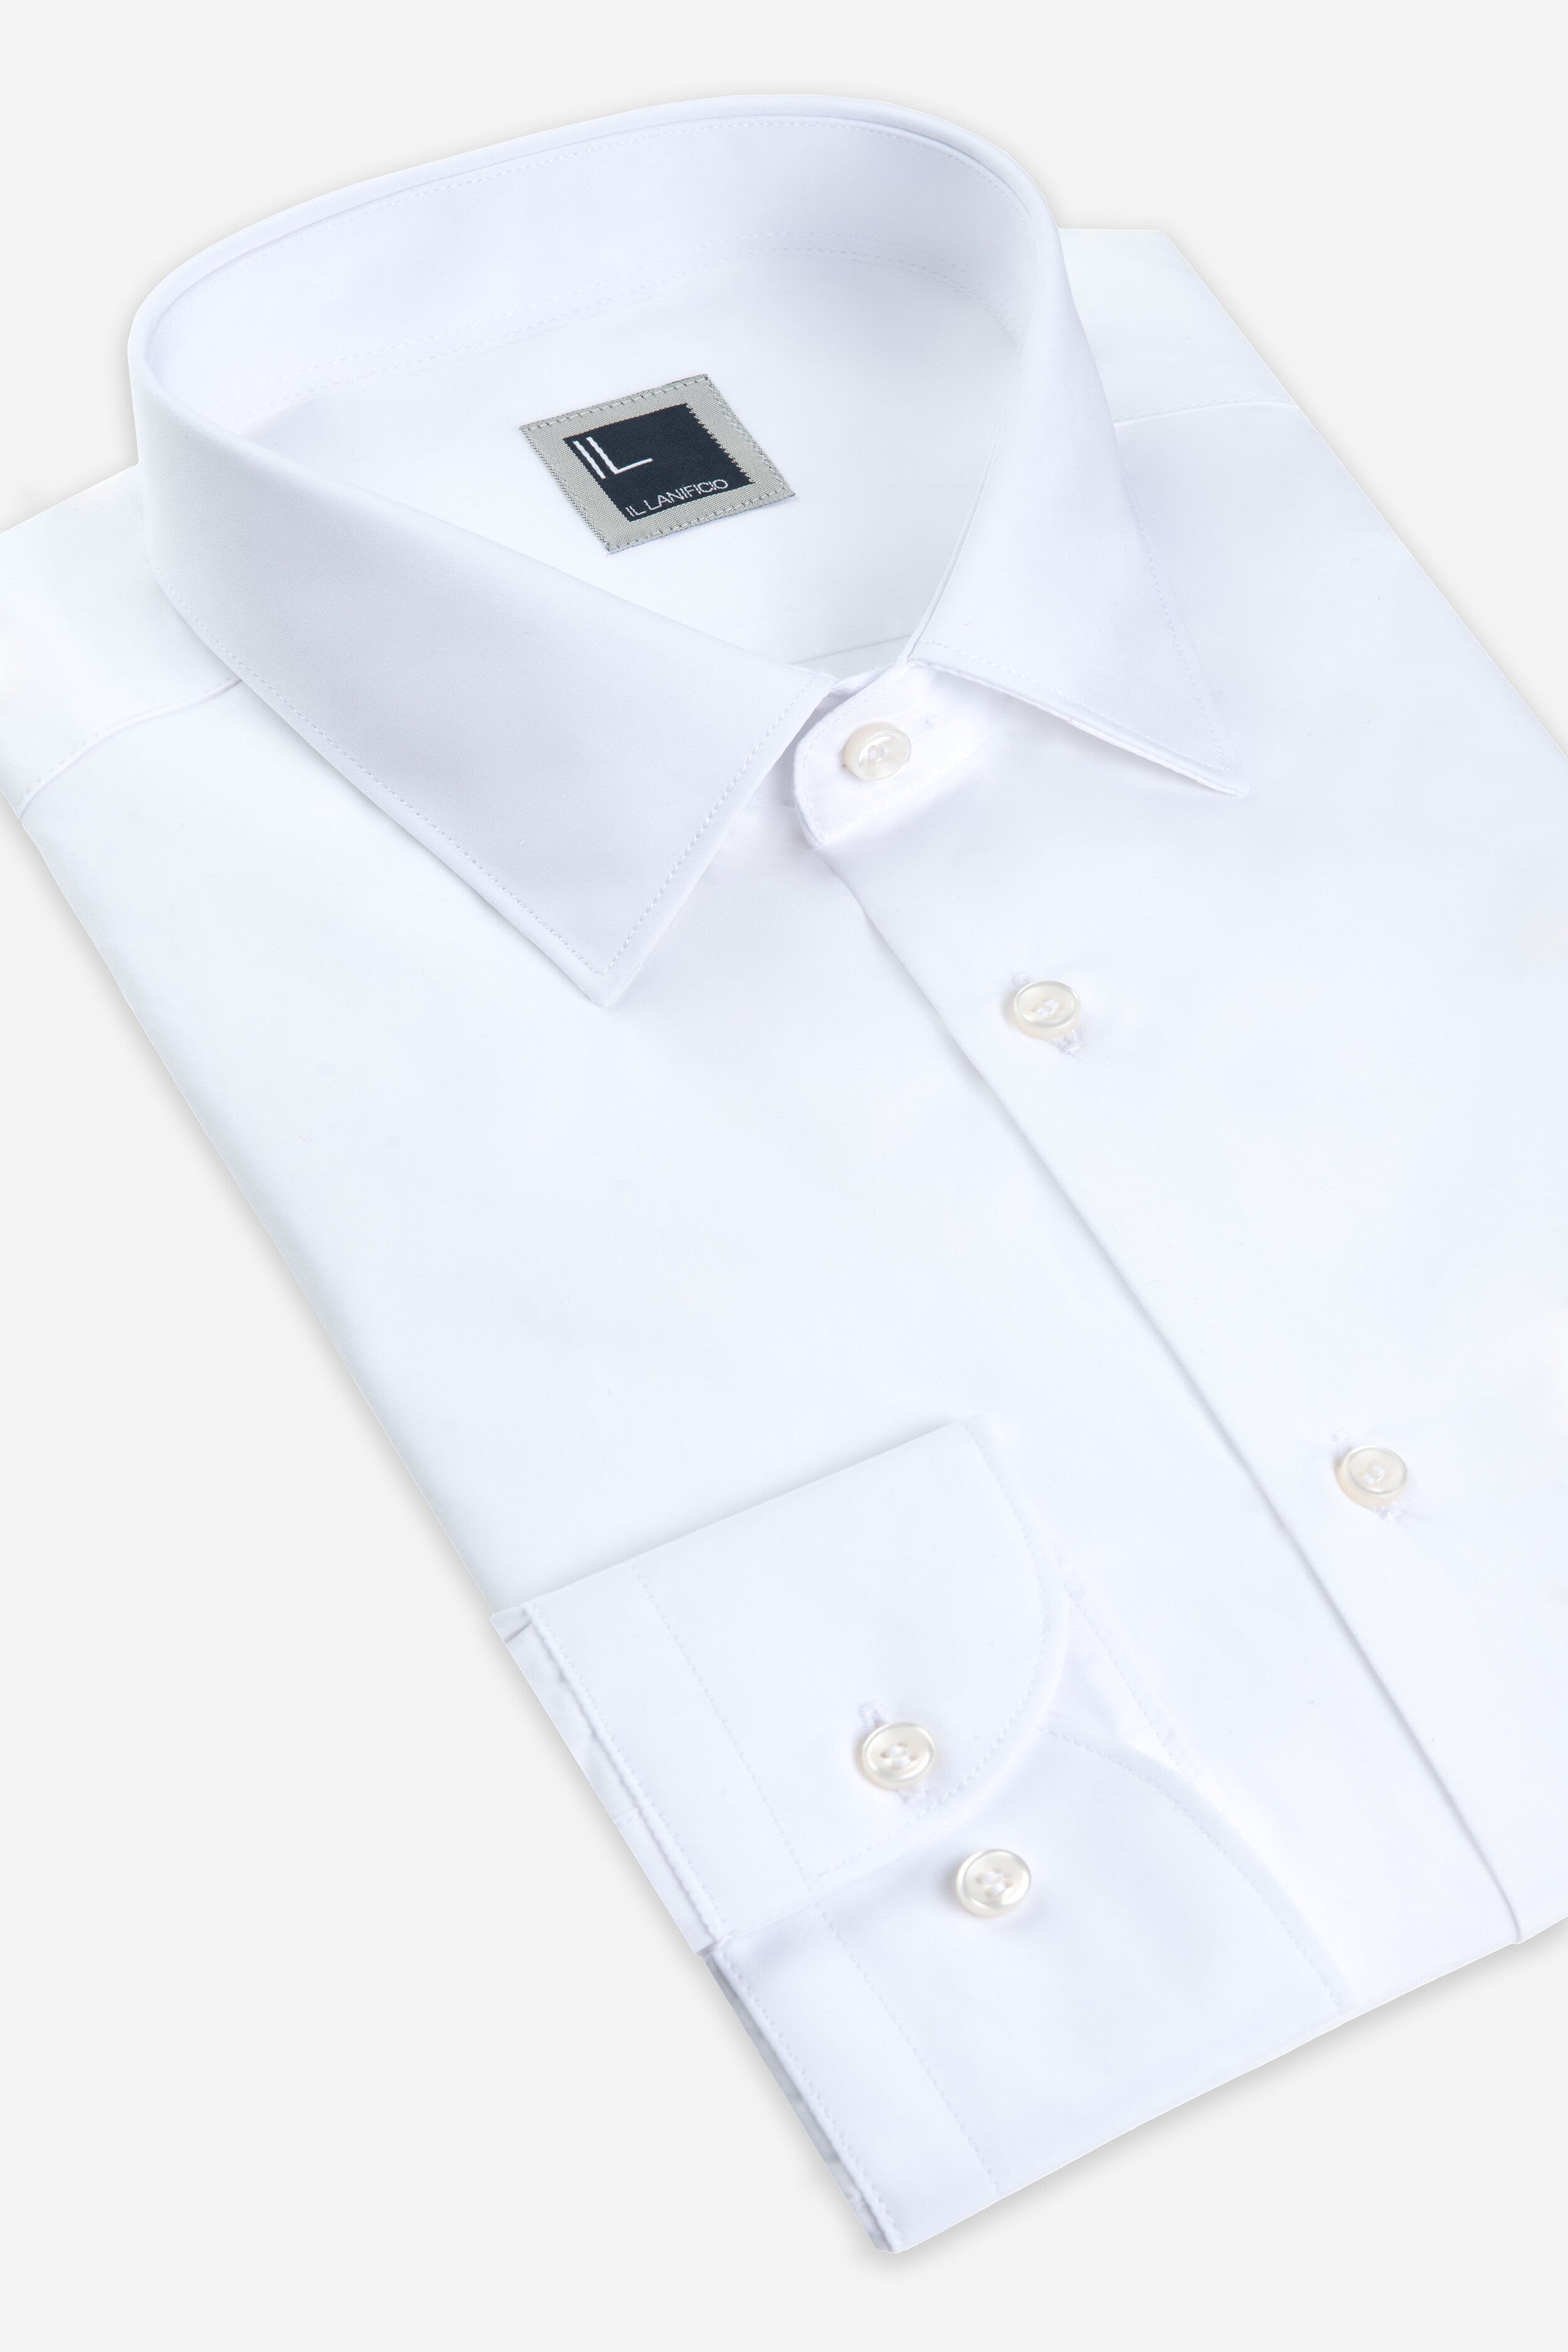 White cotton shirt - WHITE